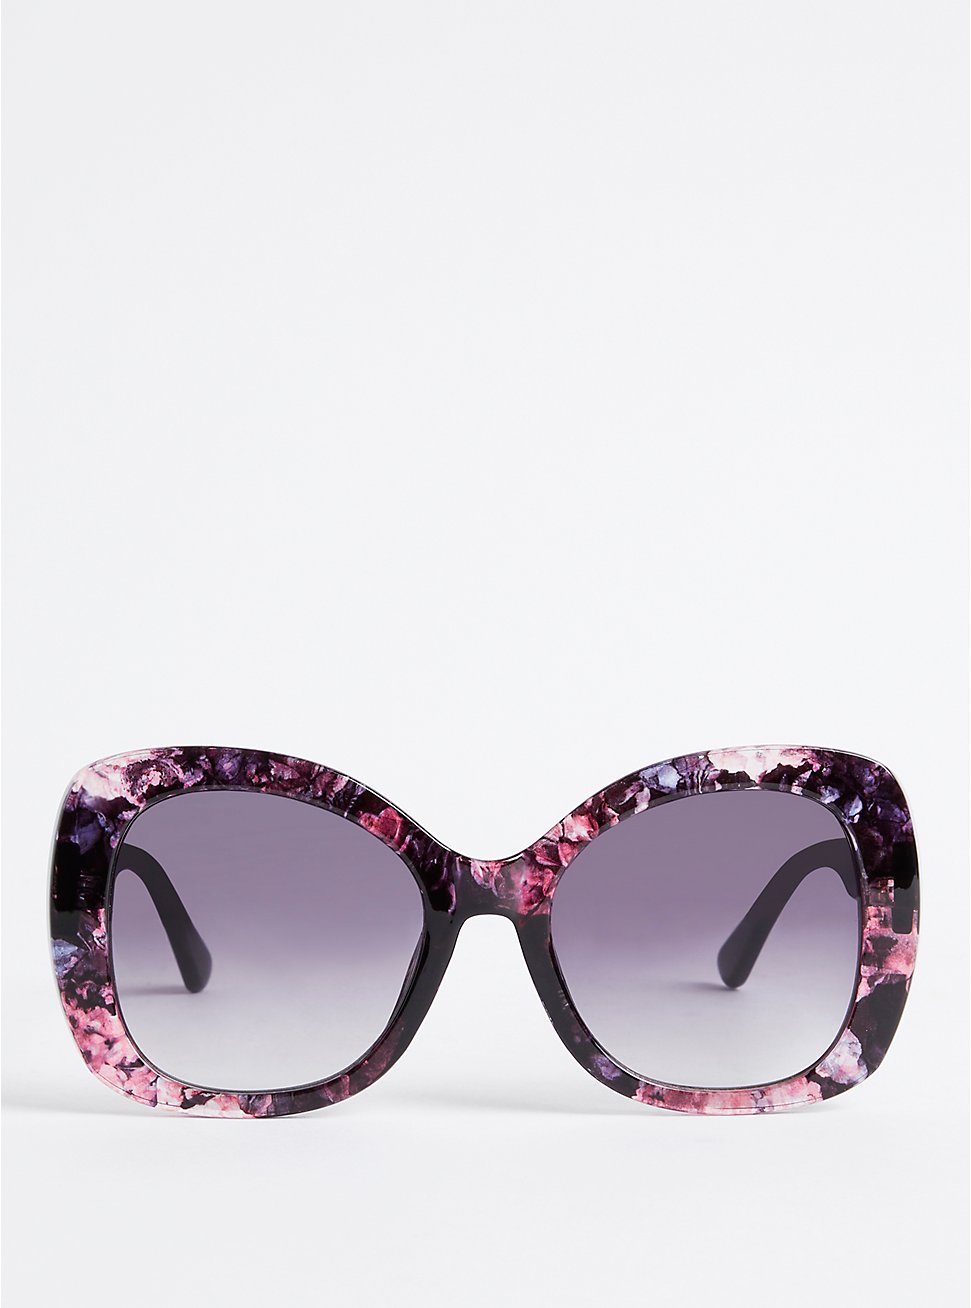 Oversized Rectangle Sunglasses - Smoke Lens, , hi-res